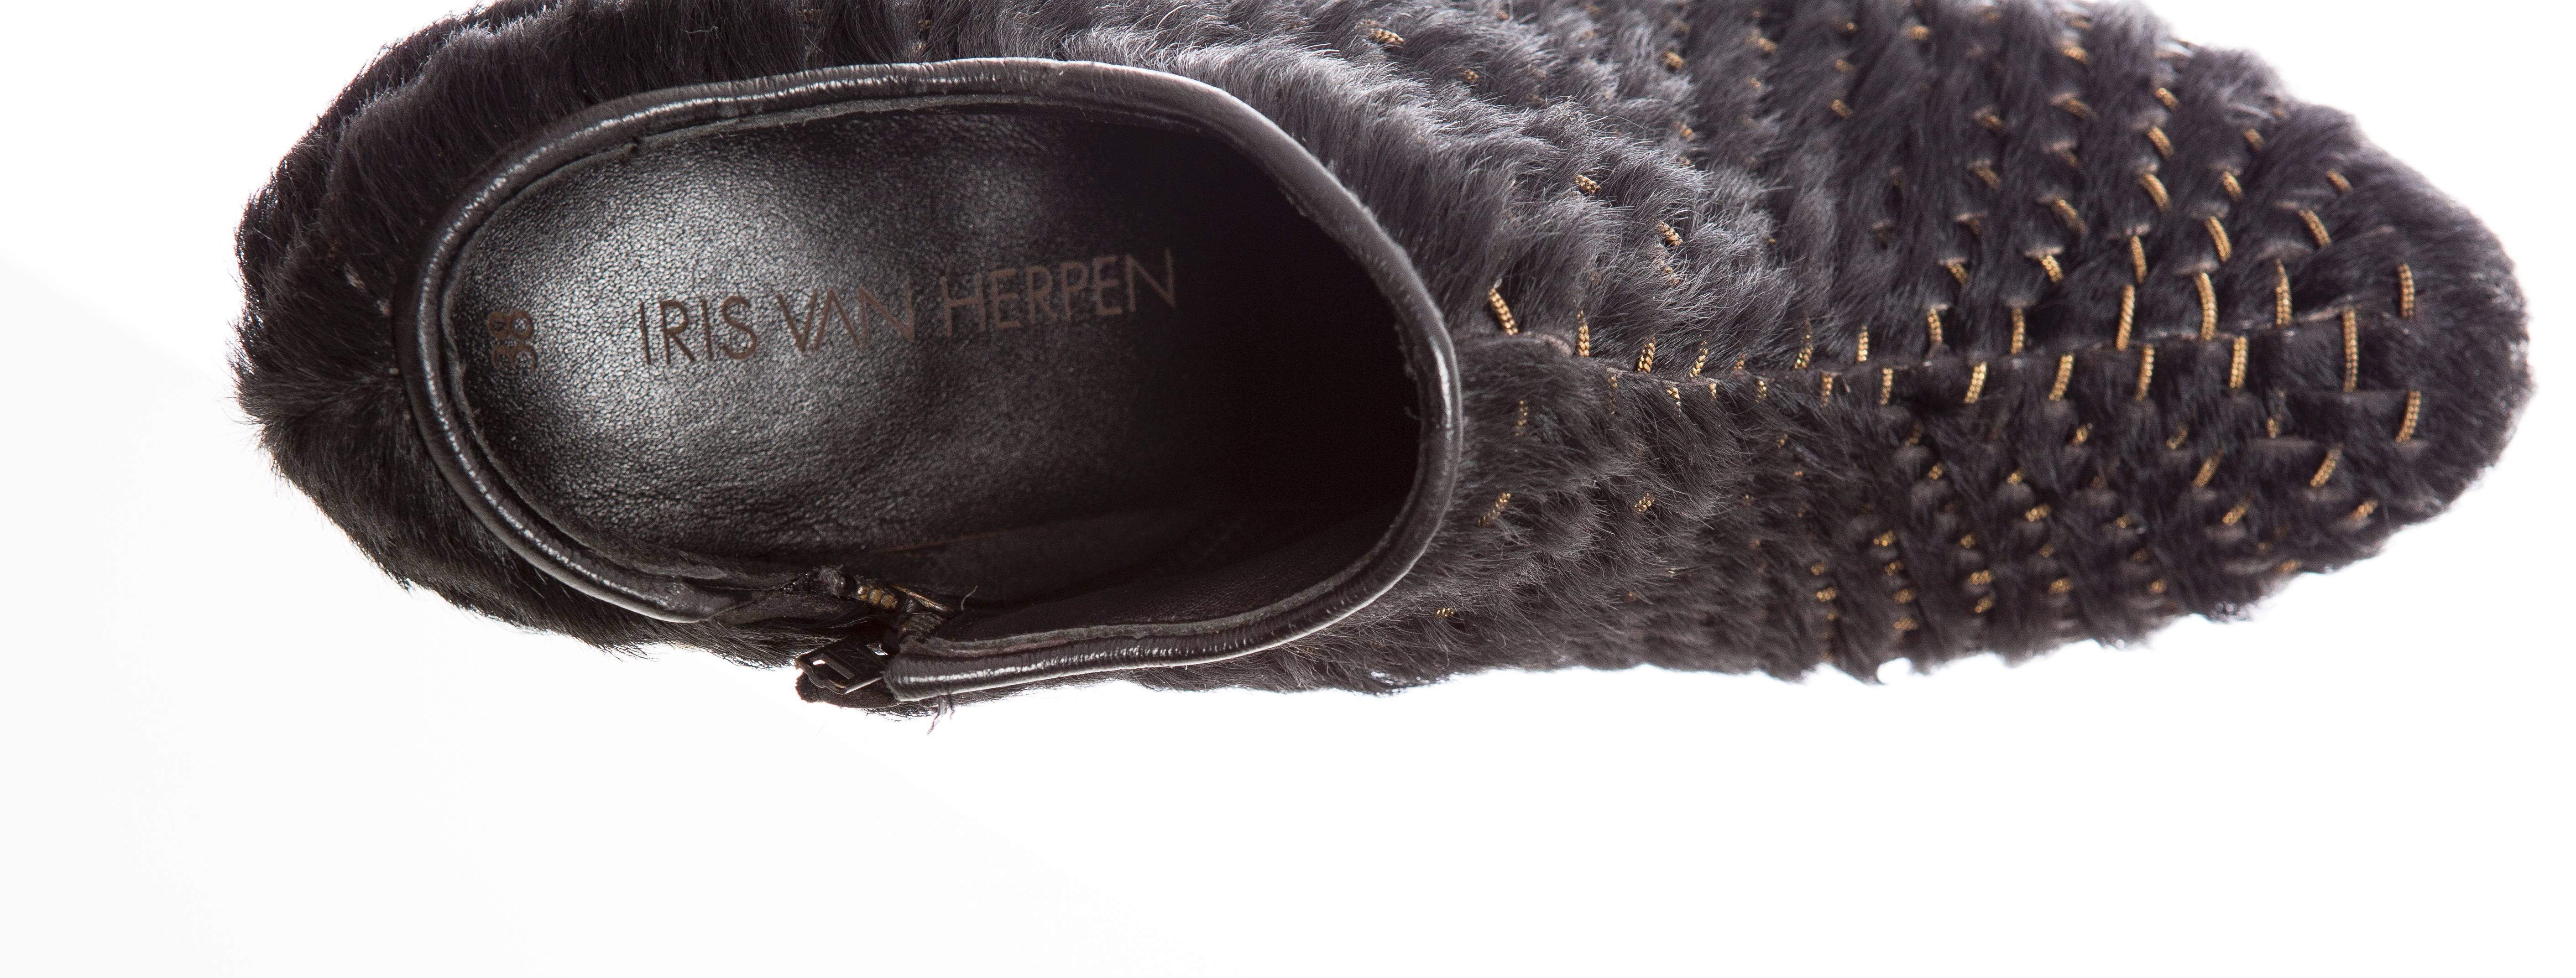 Iris Van Herpen Handmade Black Pony Hair Boots With Snake Chain Heels, Fall 2014 6